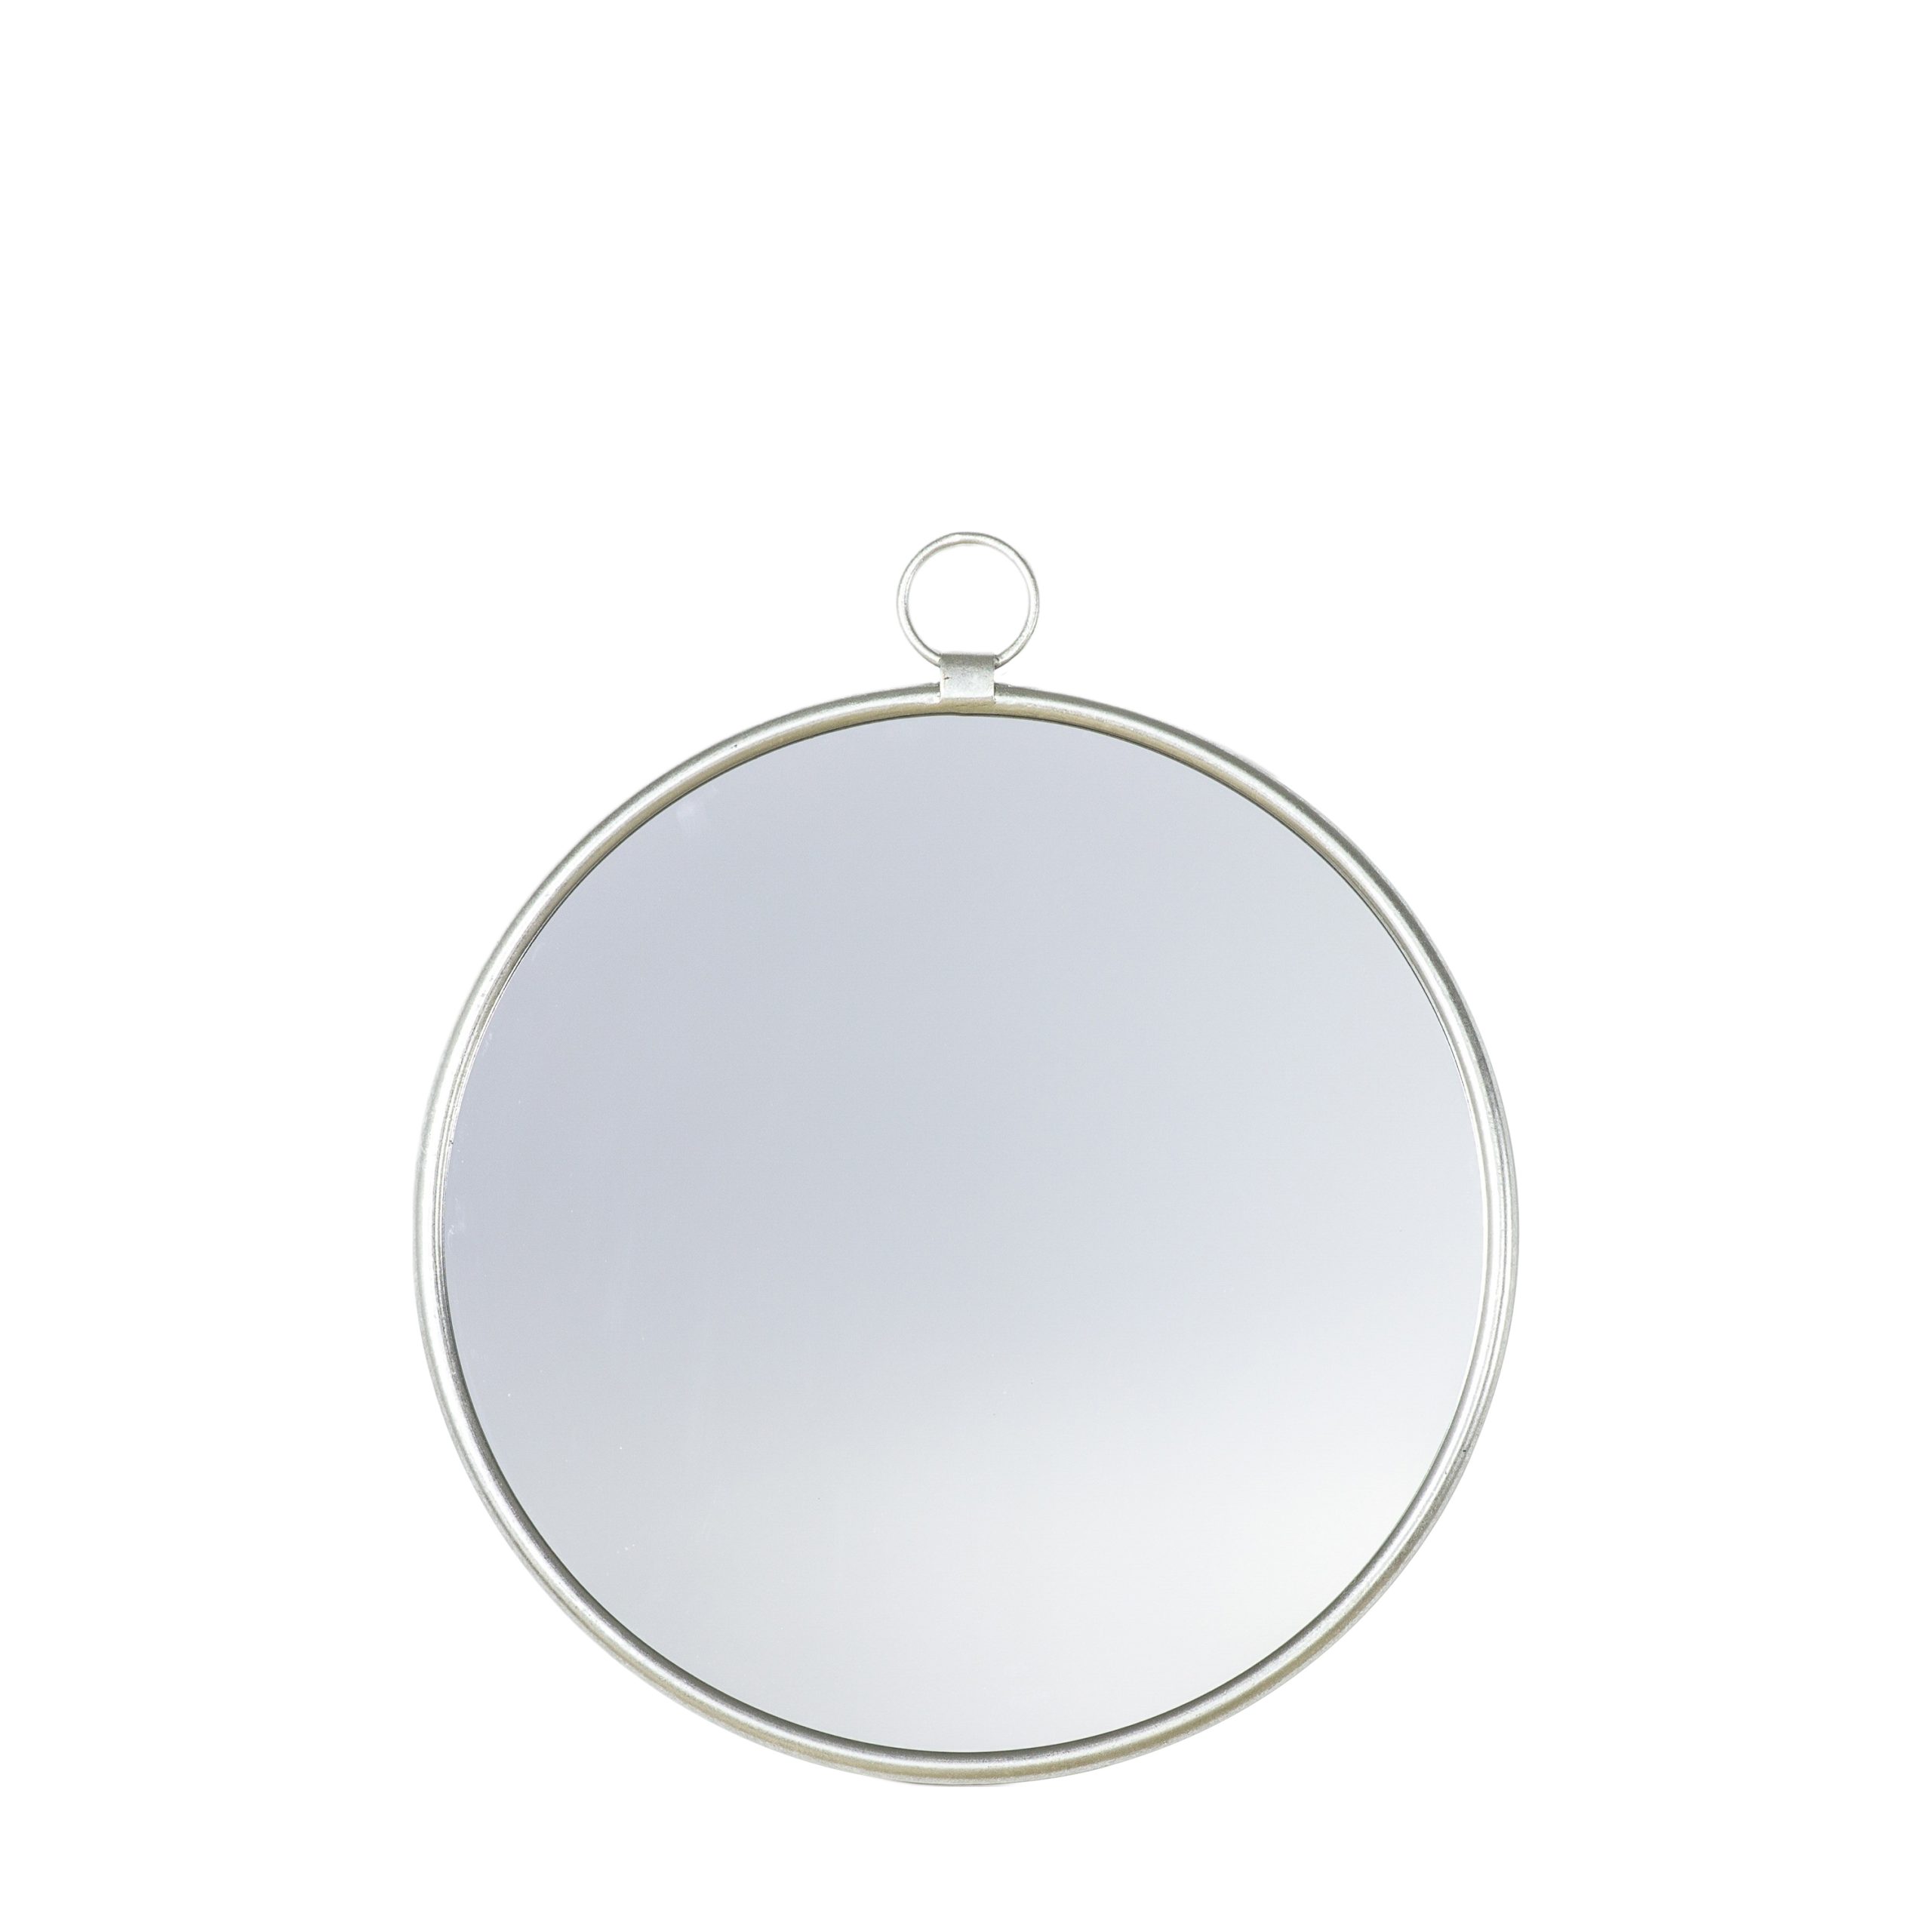 Gallery Direct Bayswater Silver Round Mirror